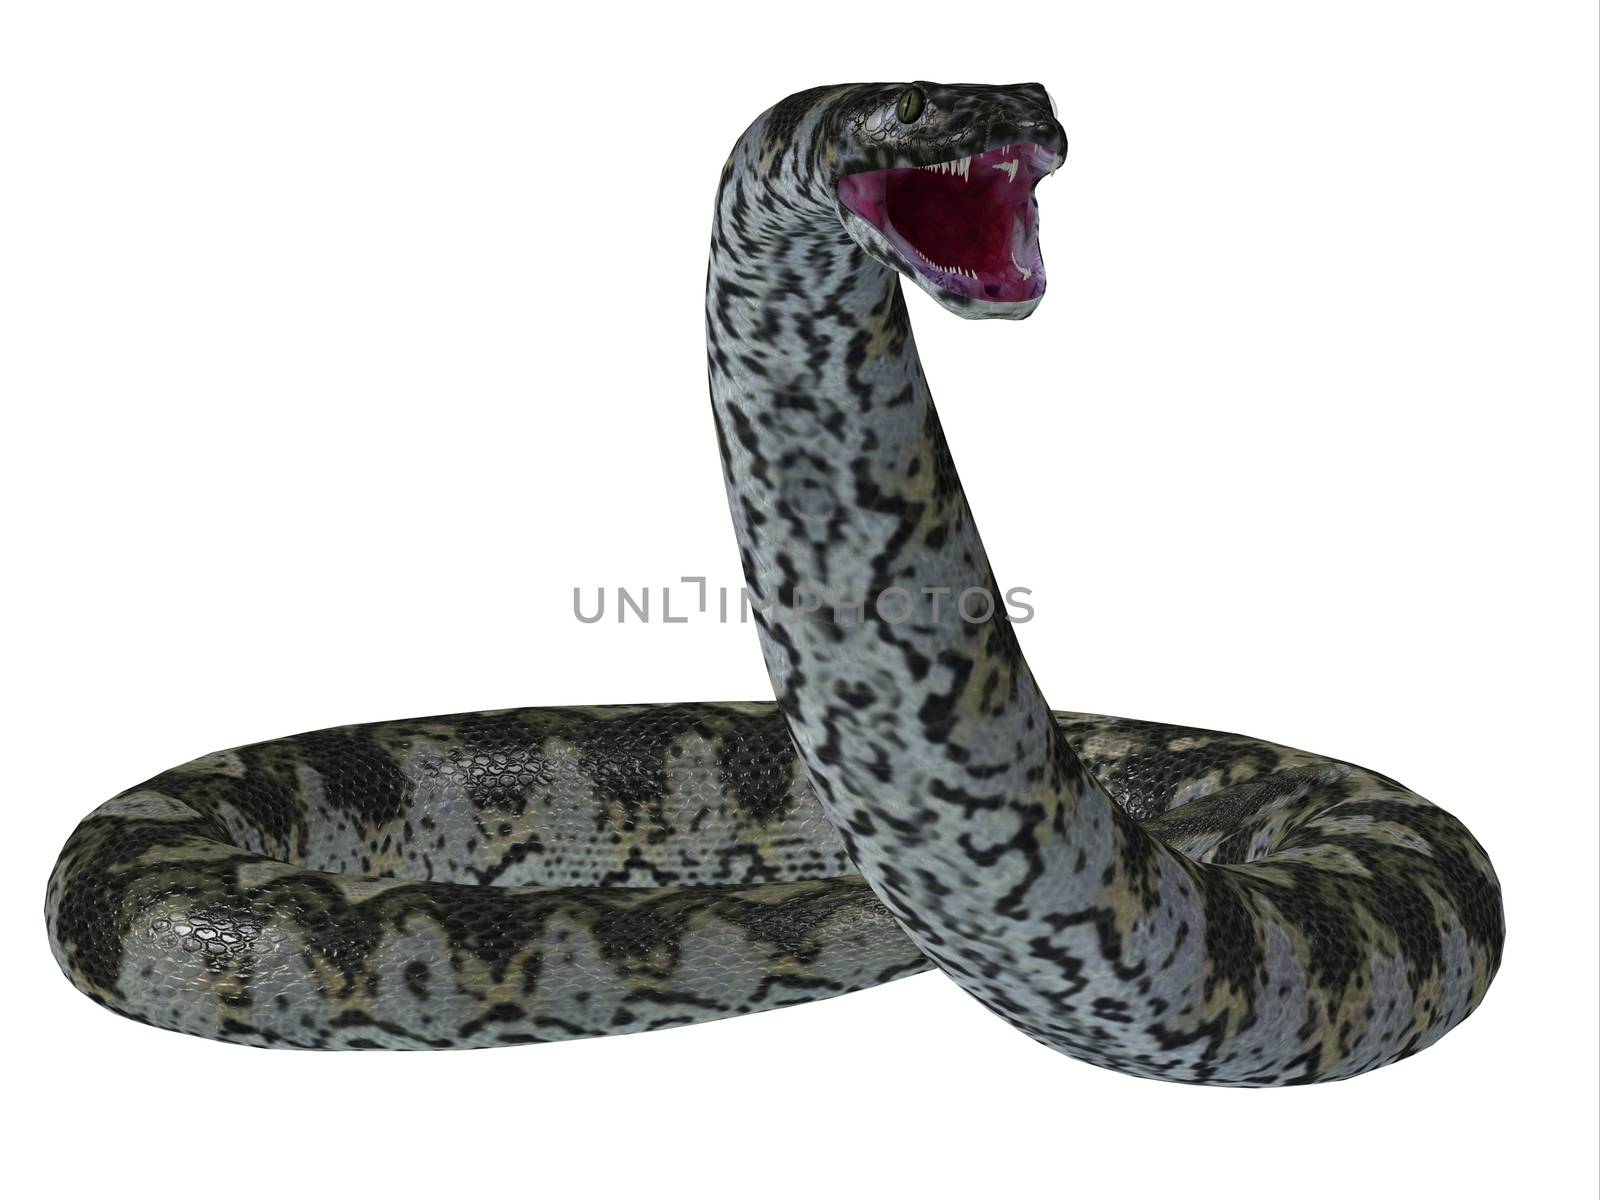 Titanoboa Snake on White by Catmando